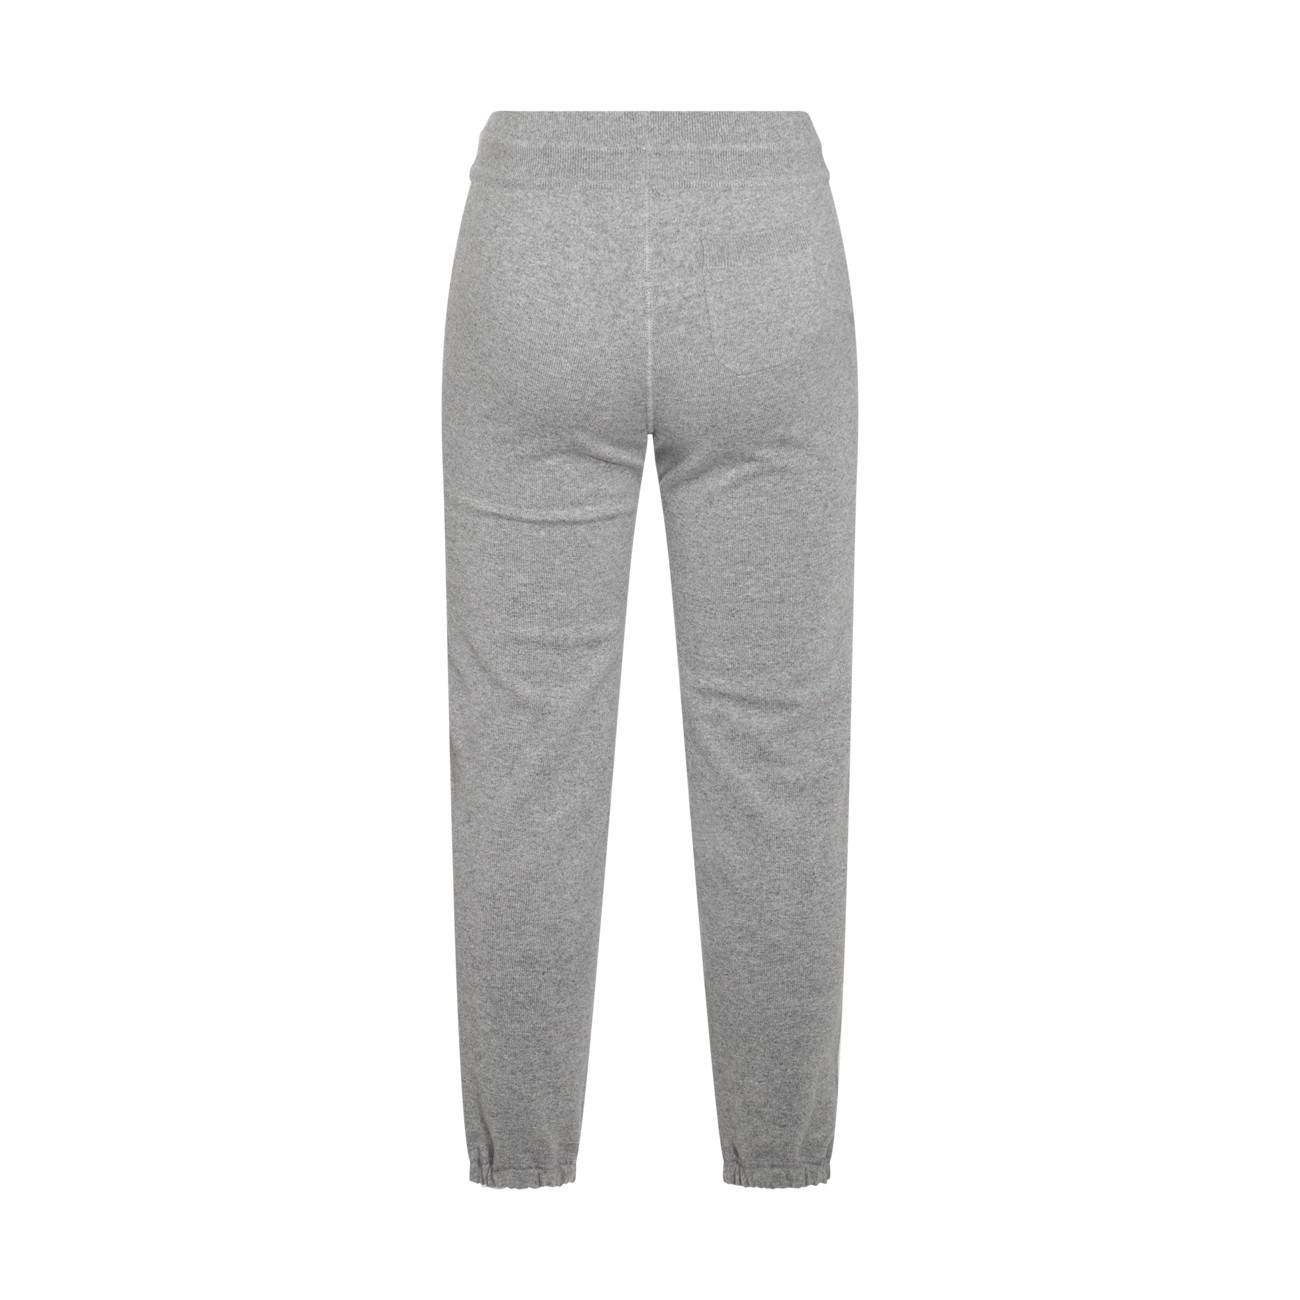 grey wool pants - 2